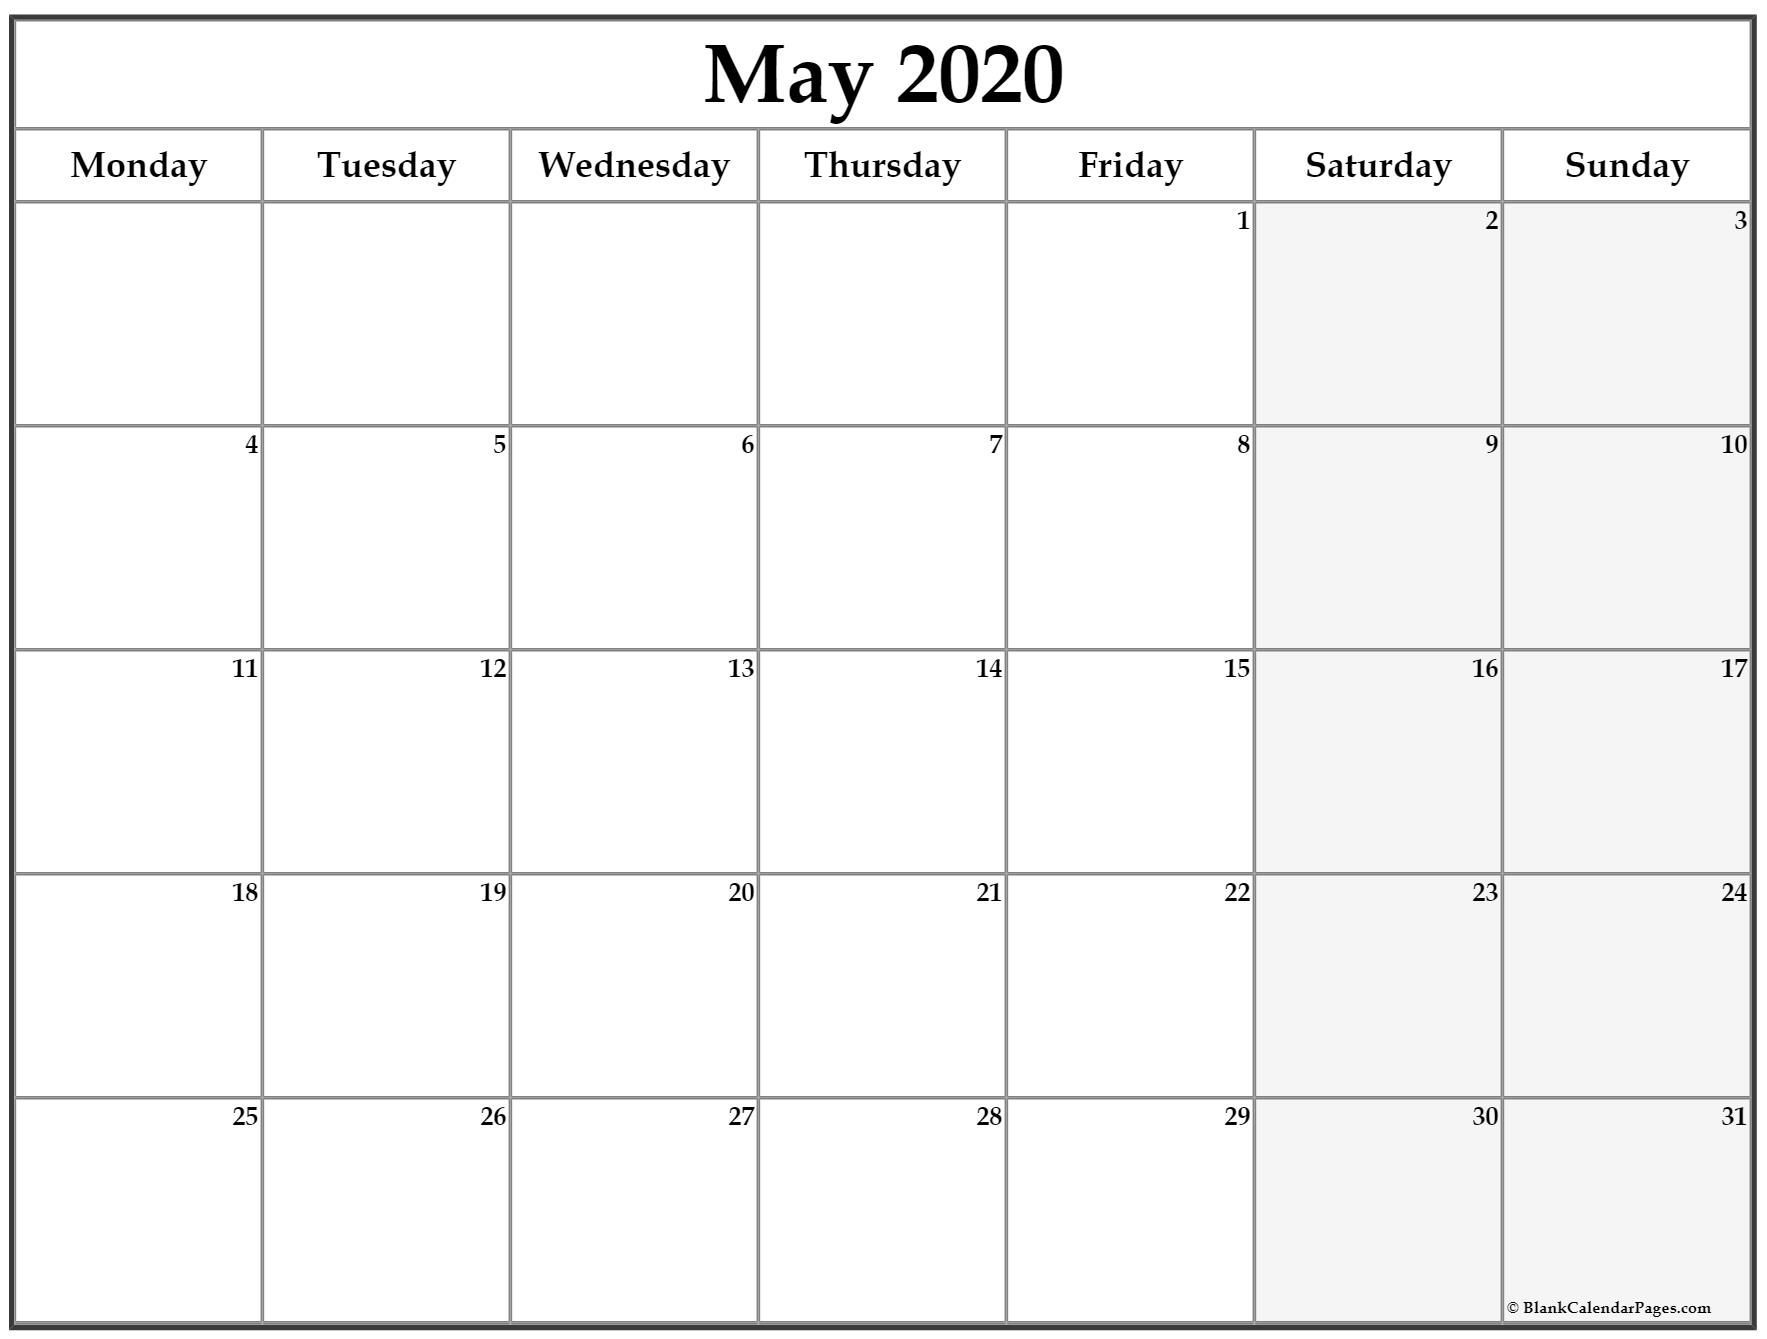 Free Monday Thru Friday Printable Calendar In 2020 regarding Monday Thru Friday Calendar 2020 Printable